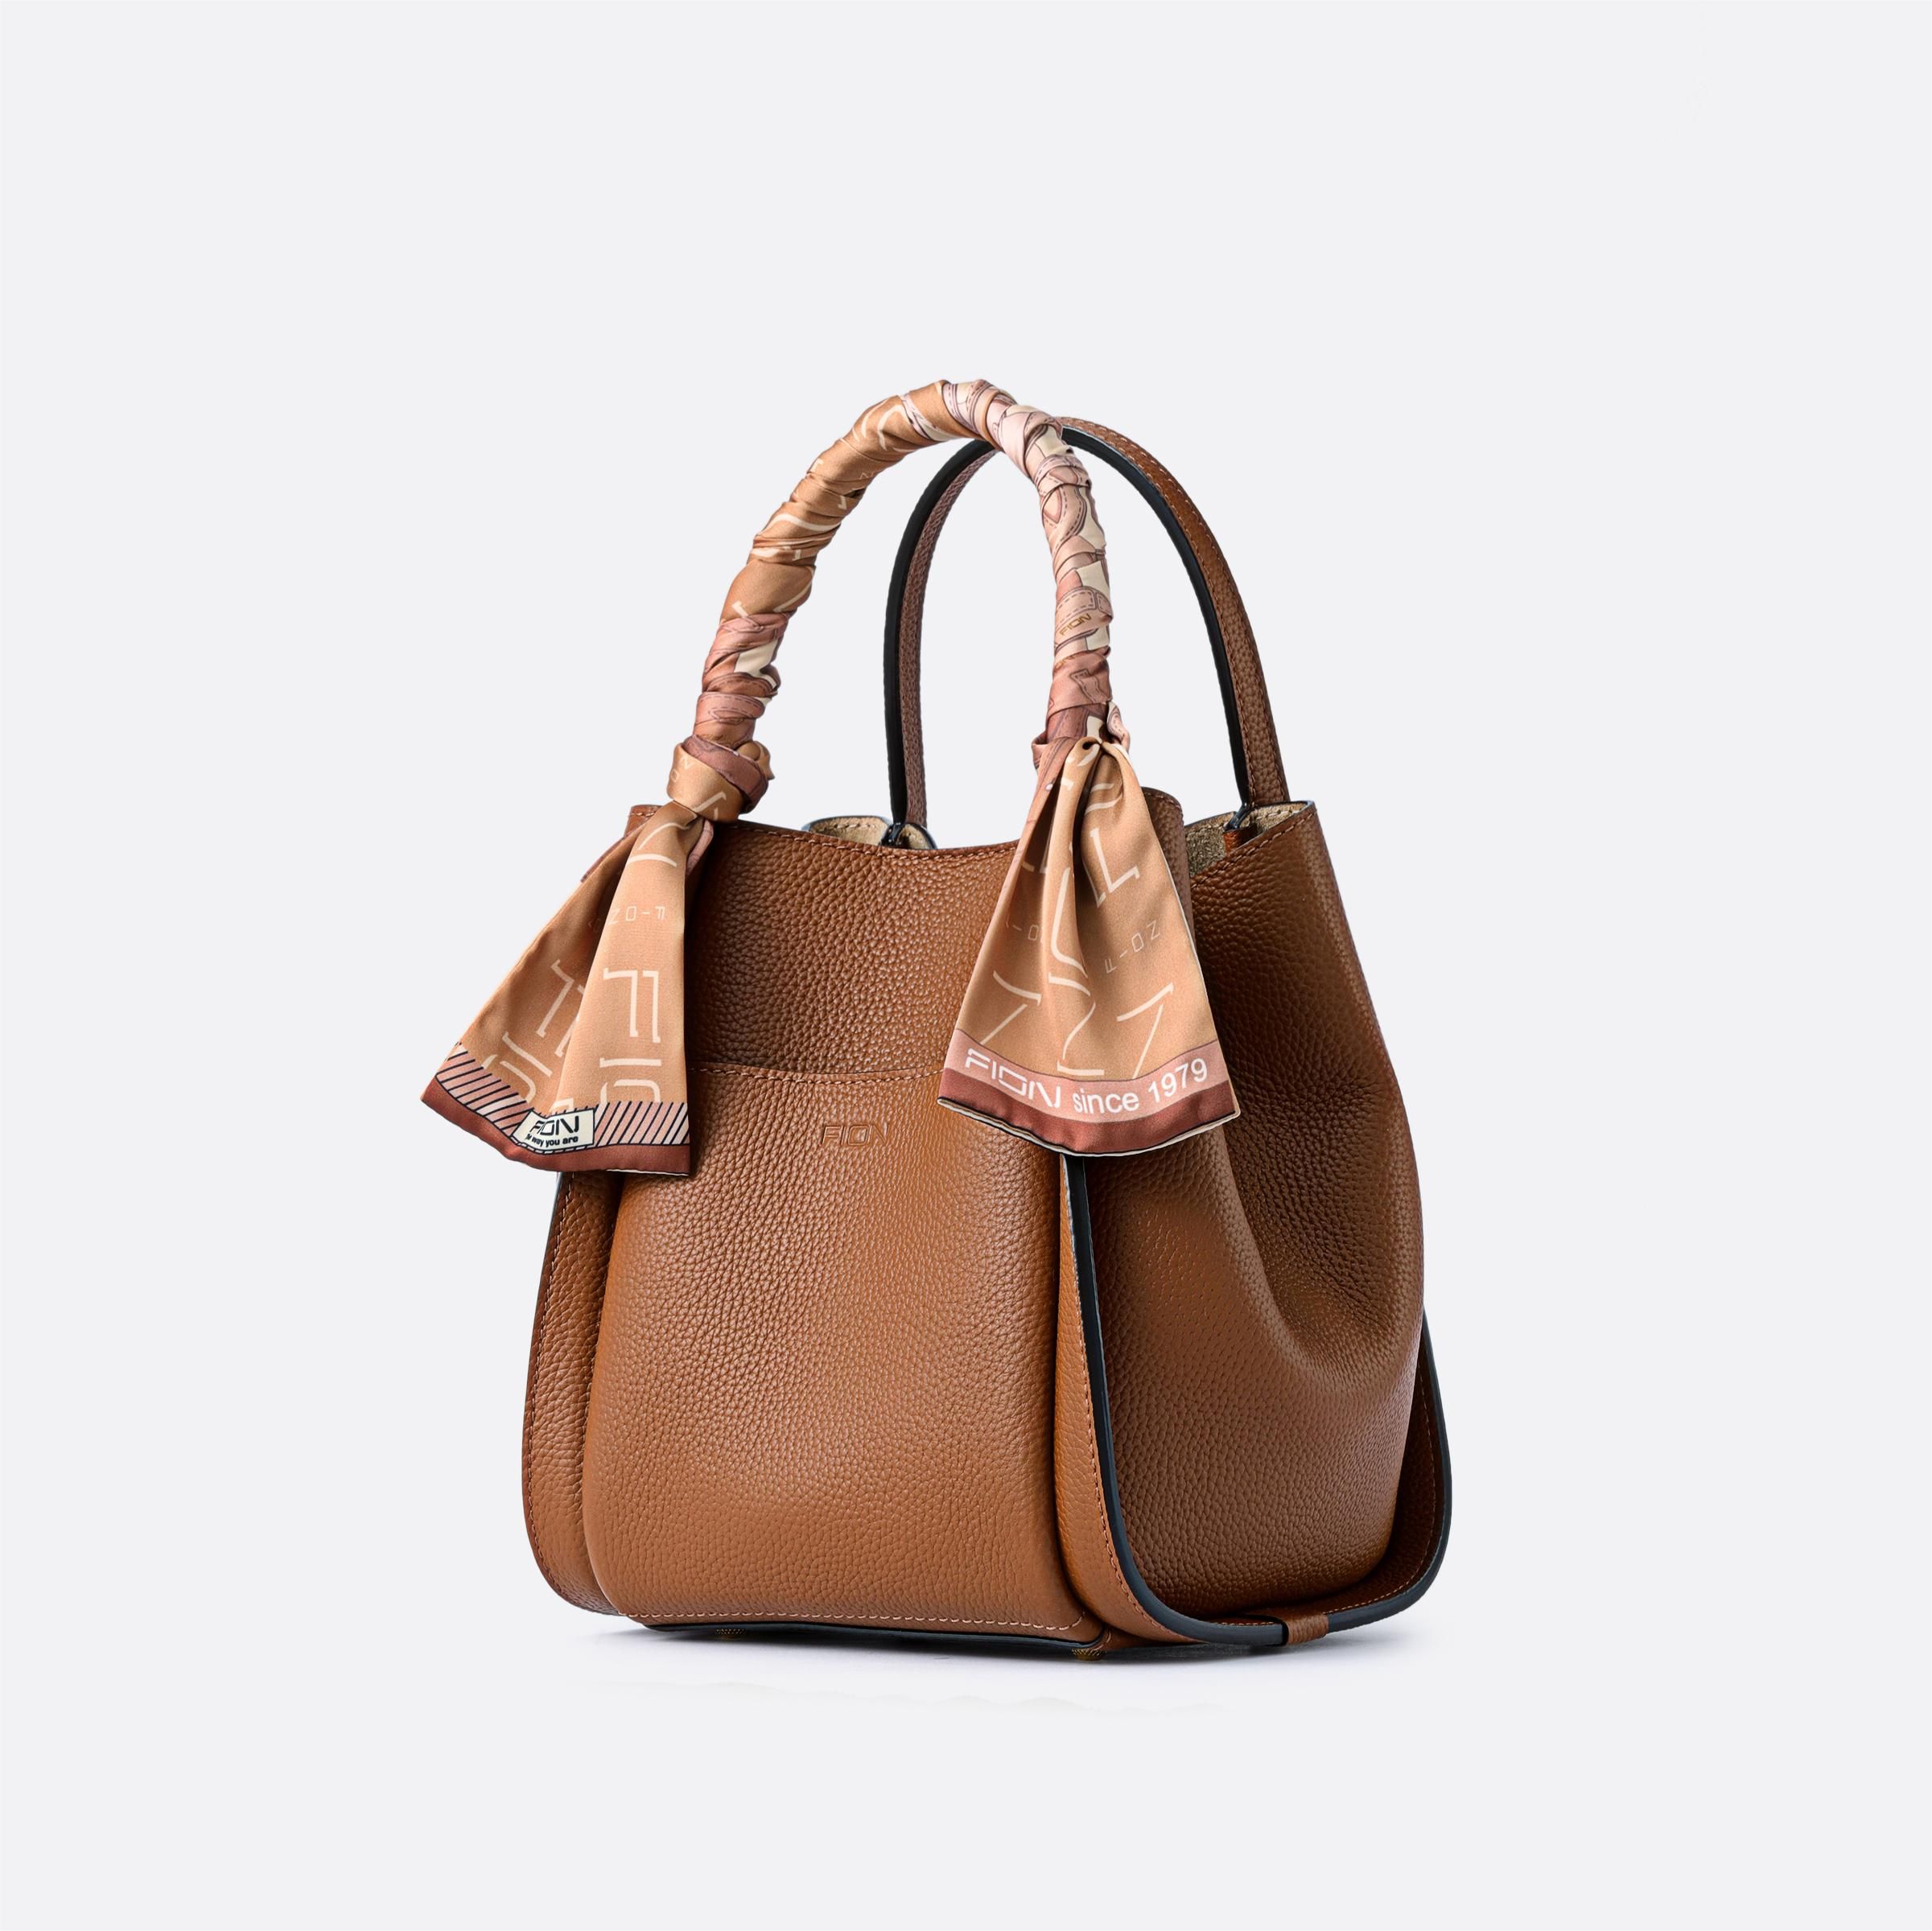 Minions Leather Mini Crossbody & Shoulder Handbag – FION HK